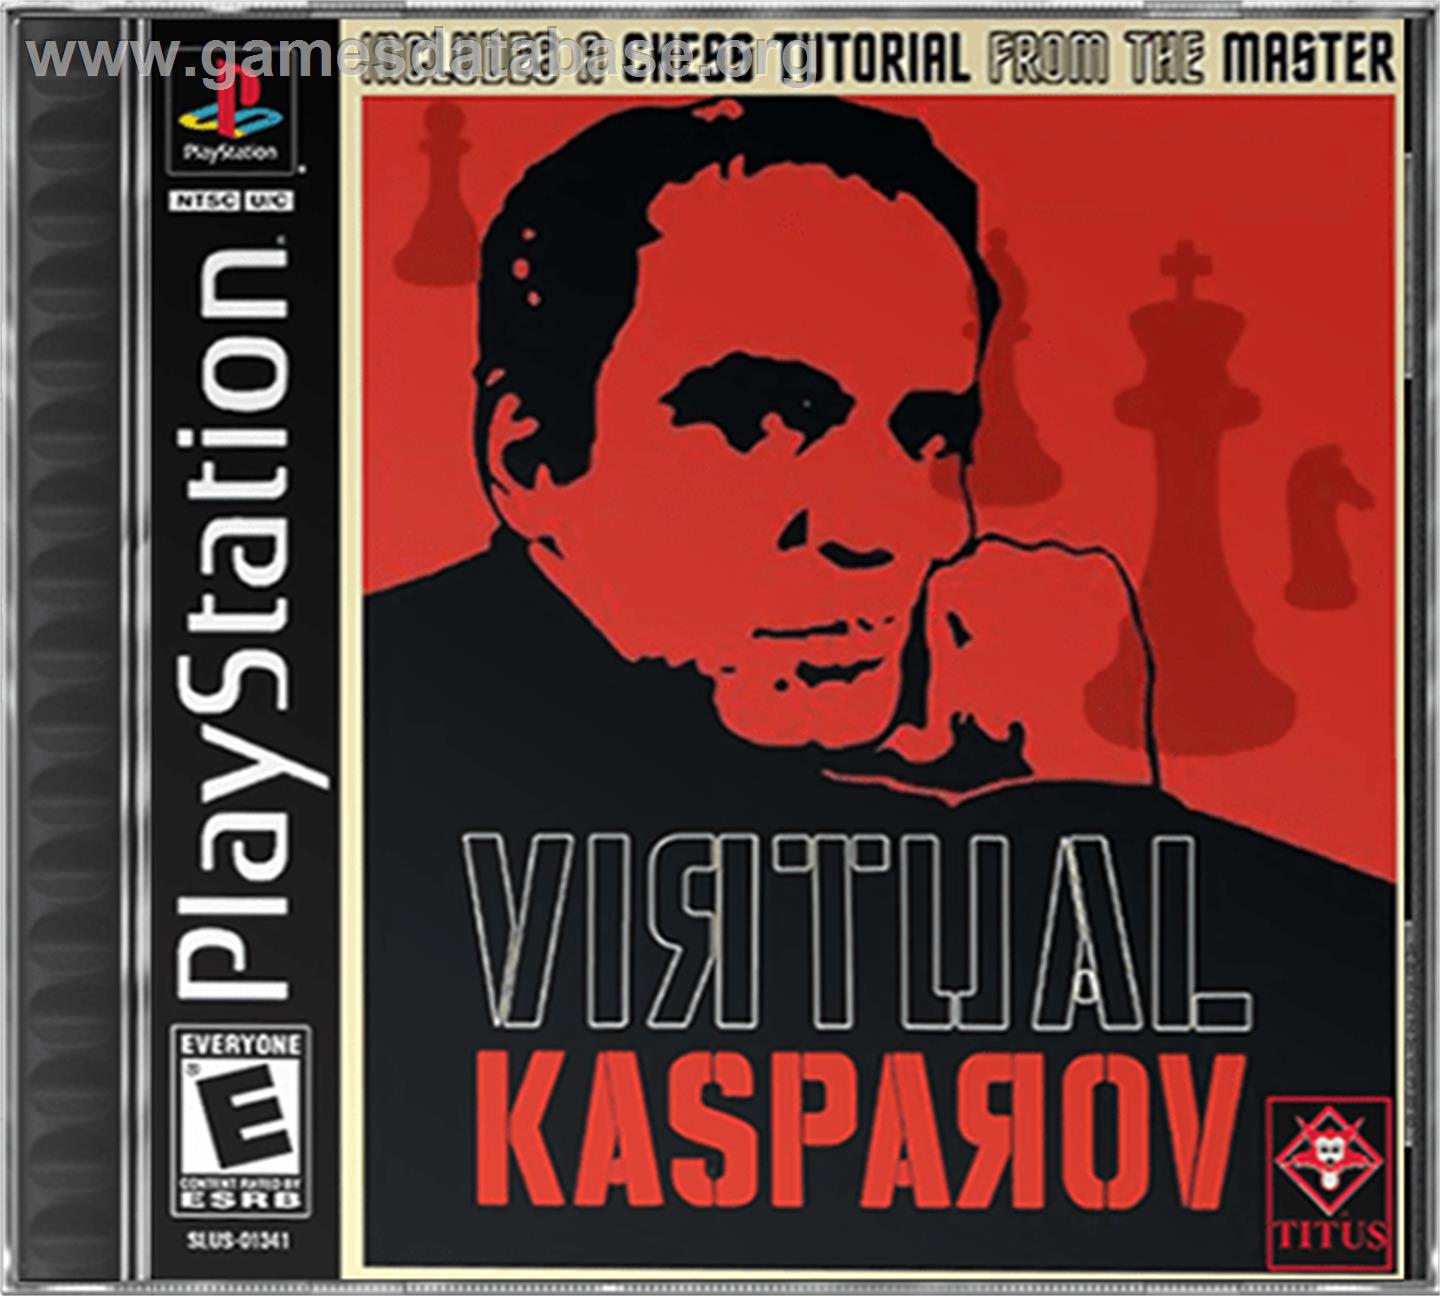 Virtual Kasparov - Sony Playstation - Artwork - Box